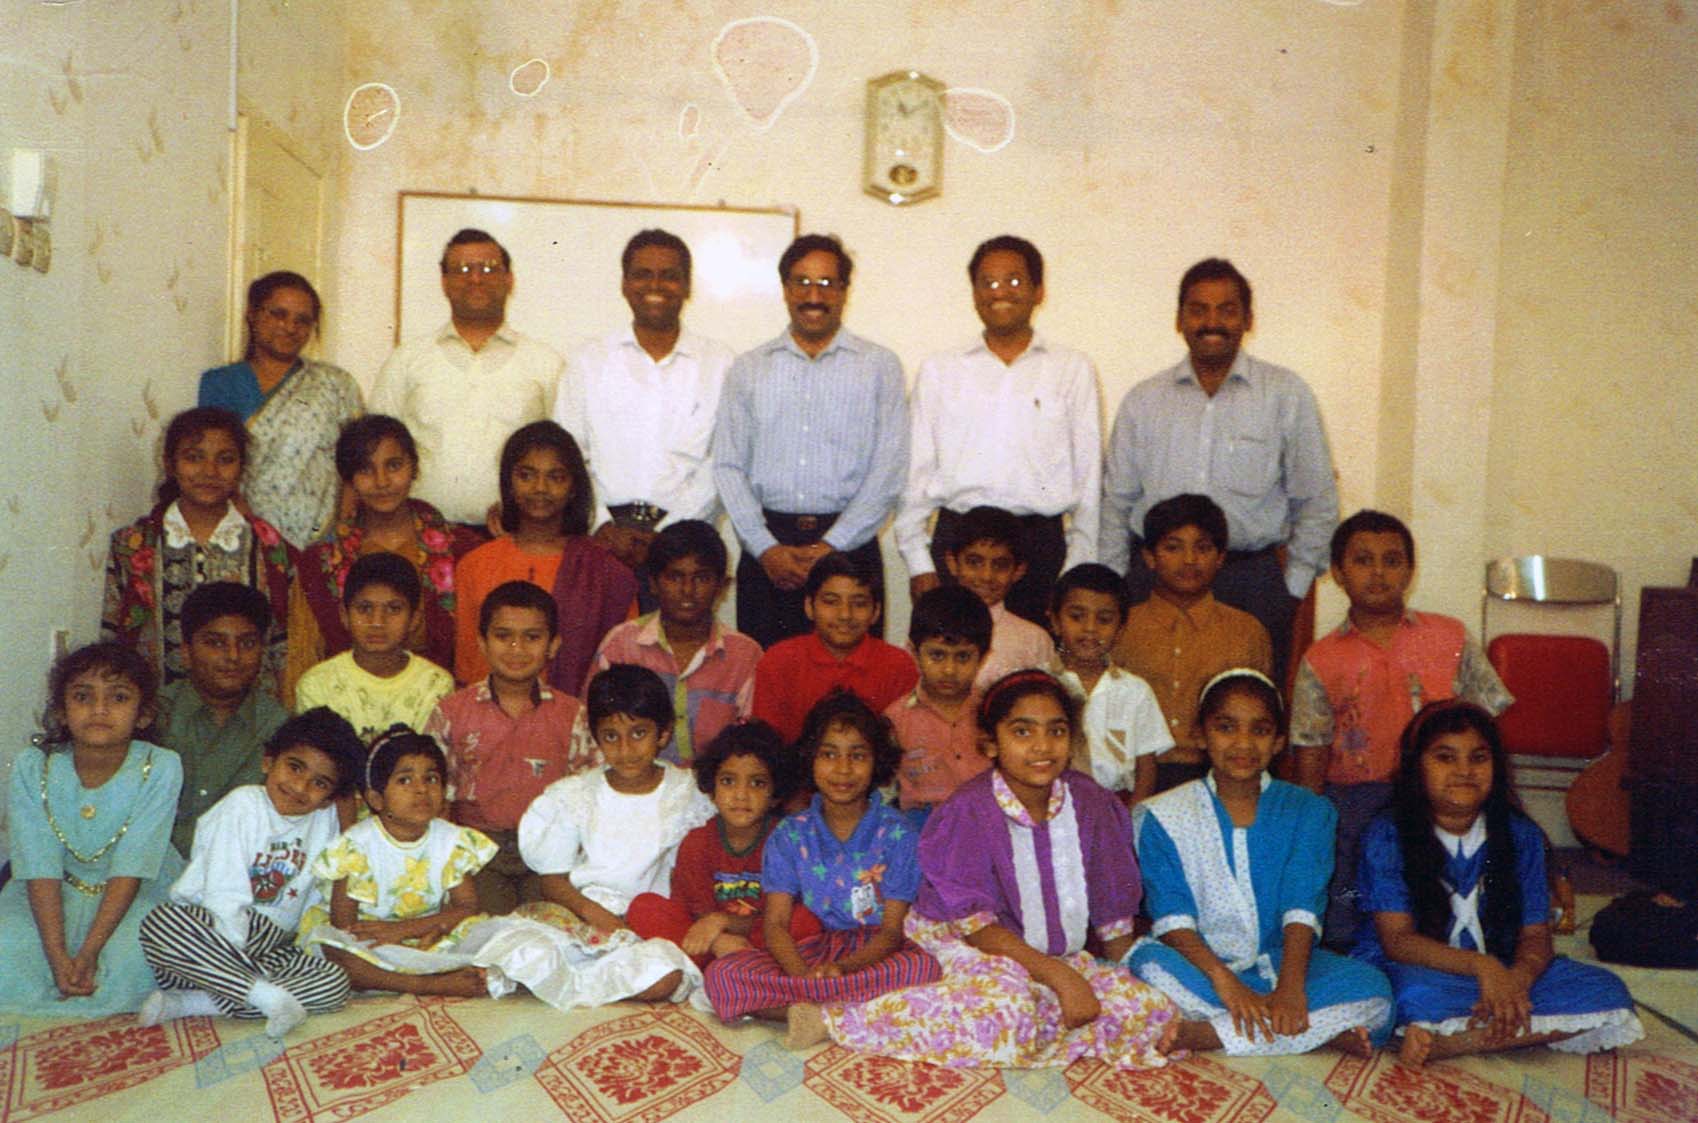 First children’s bible school group photo